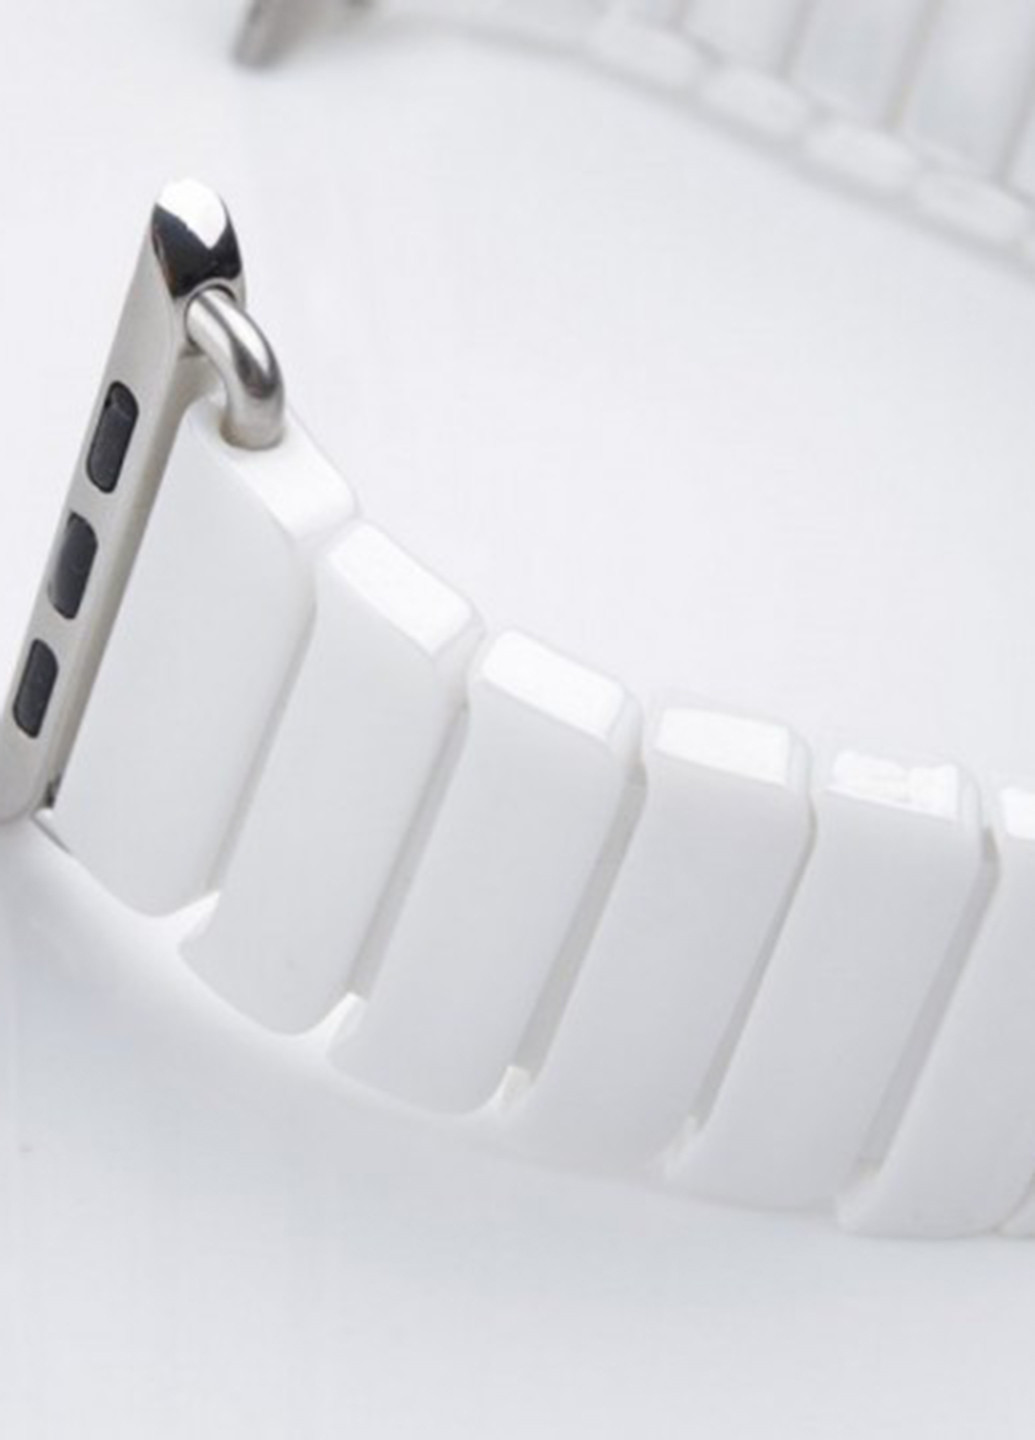 Ремінець для годинника Apple Watch 38/40 mm Ceramic White XoKo ремешок для часов apple watch 38/40 mm xoko ceramic white (143704615)